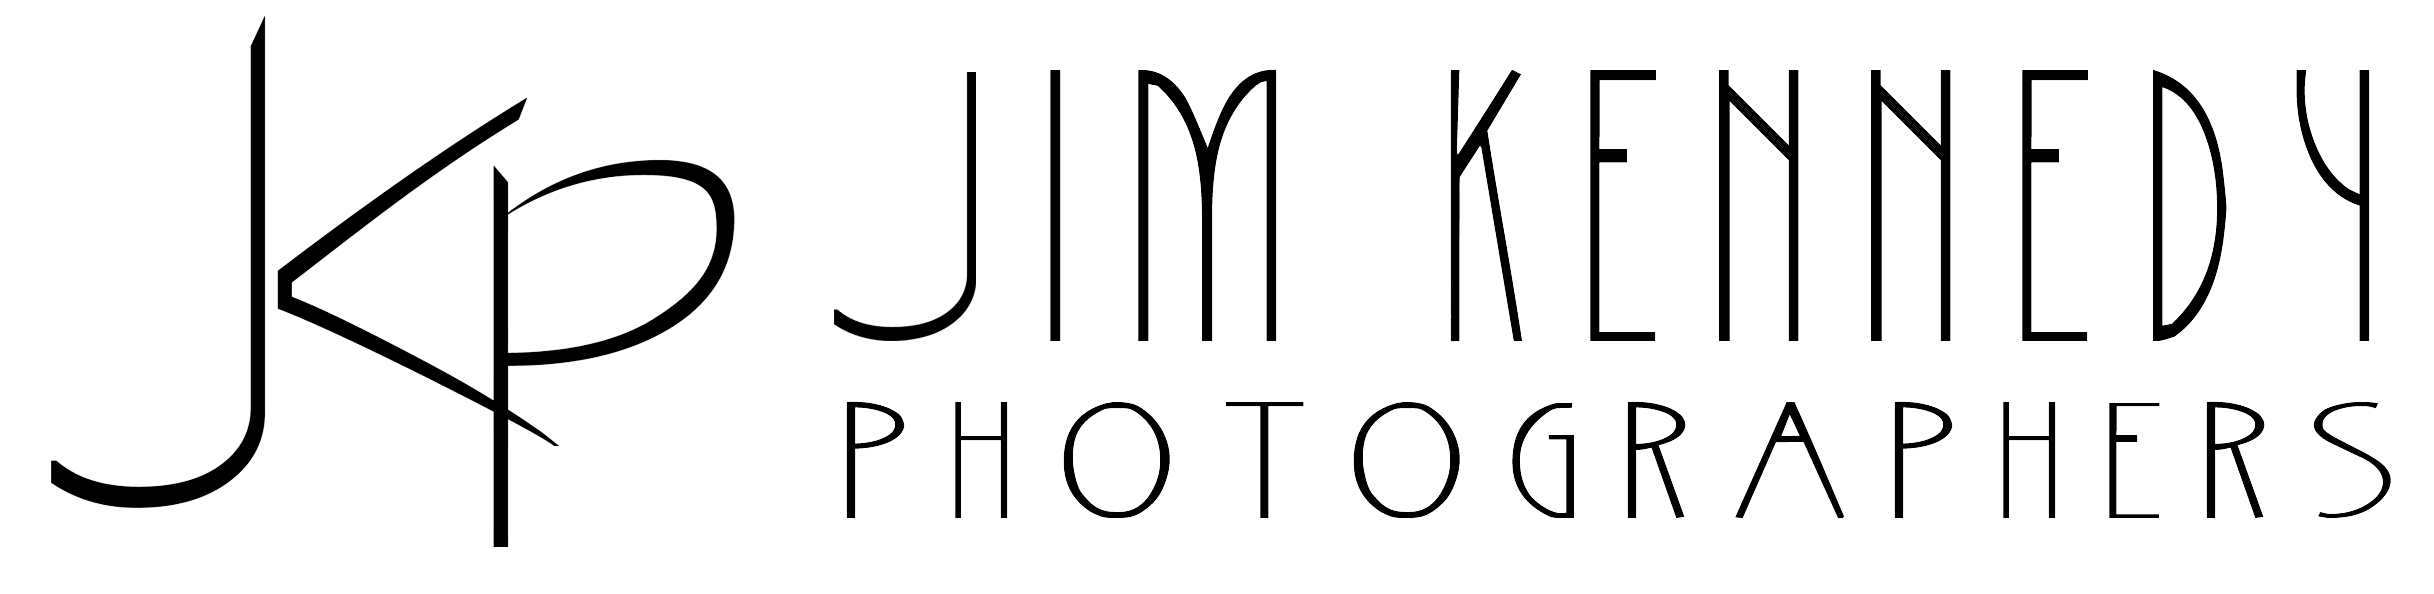 JKP logo Black copy.png